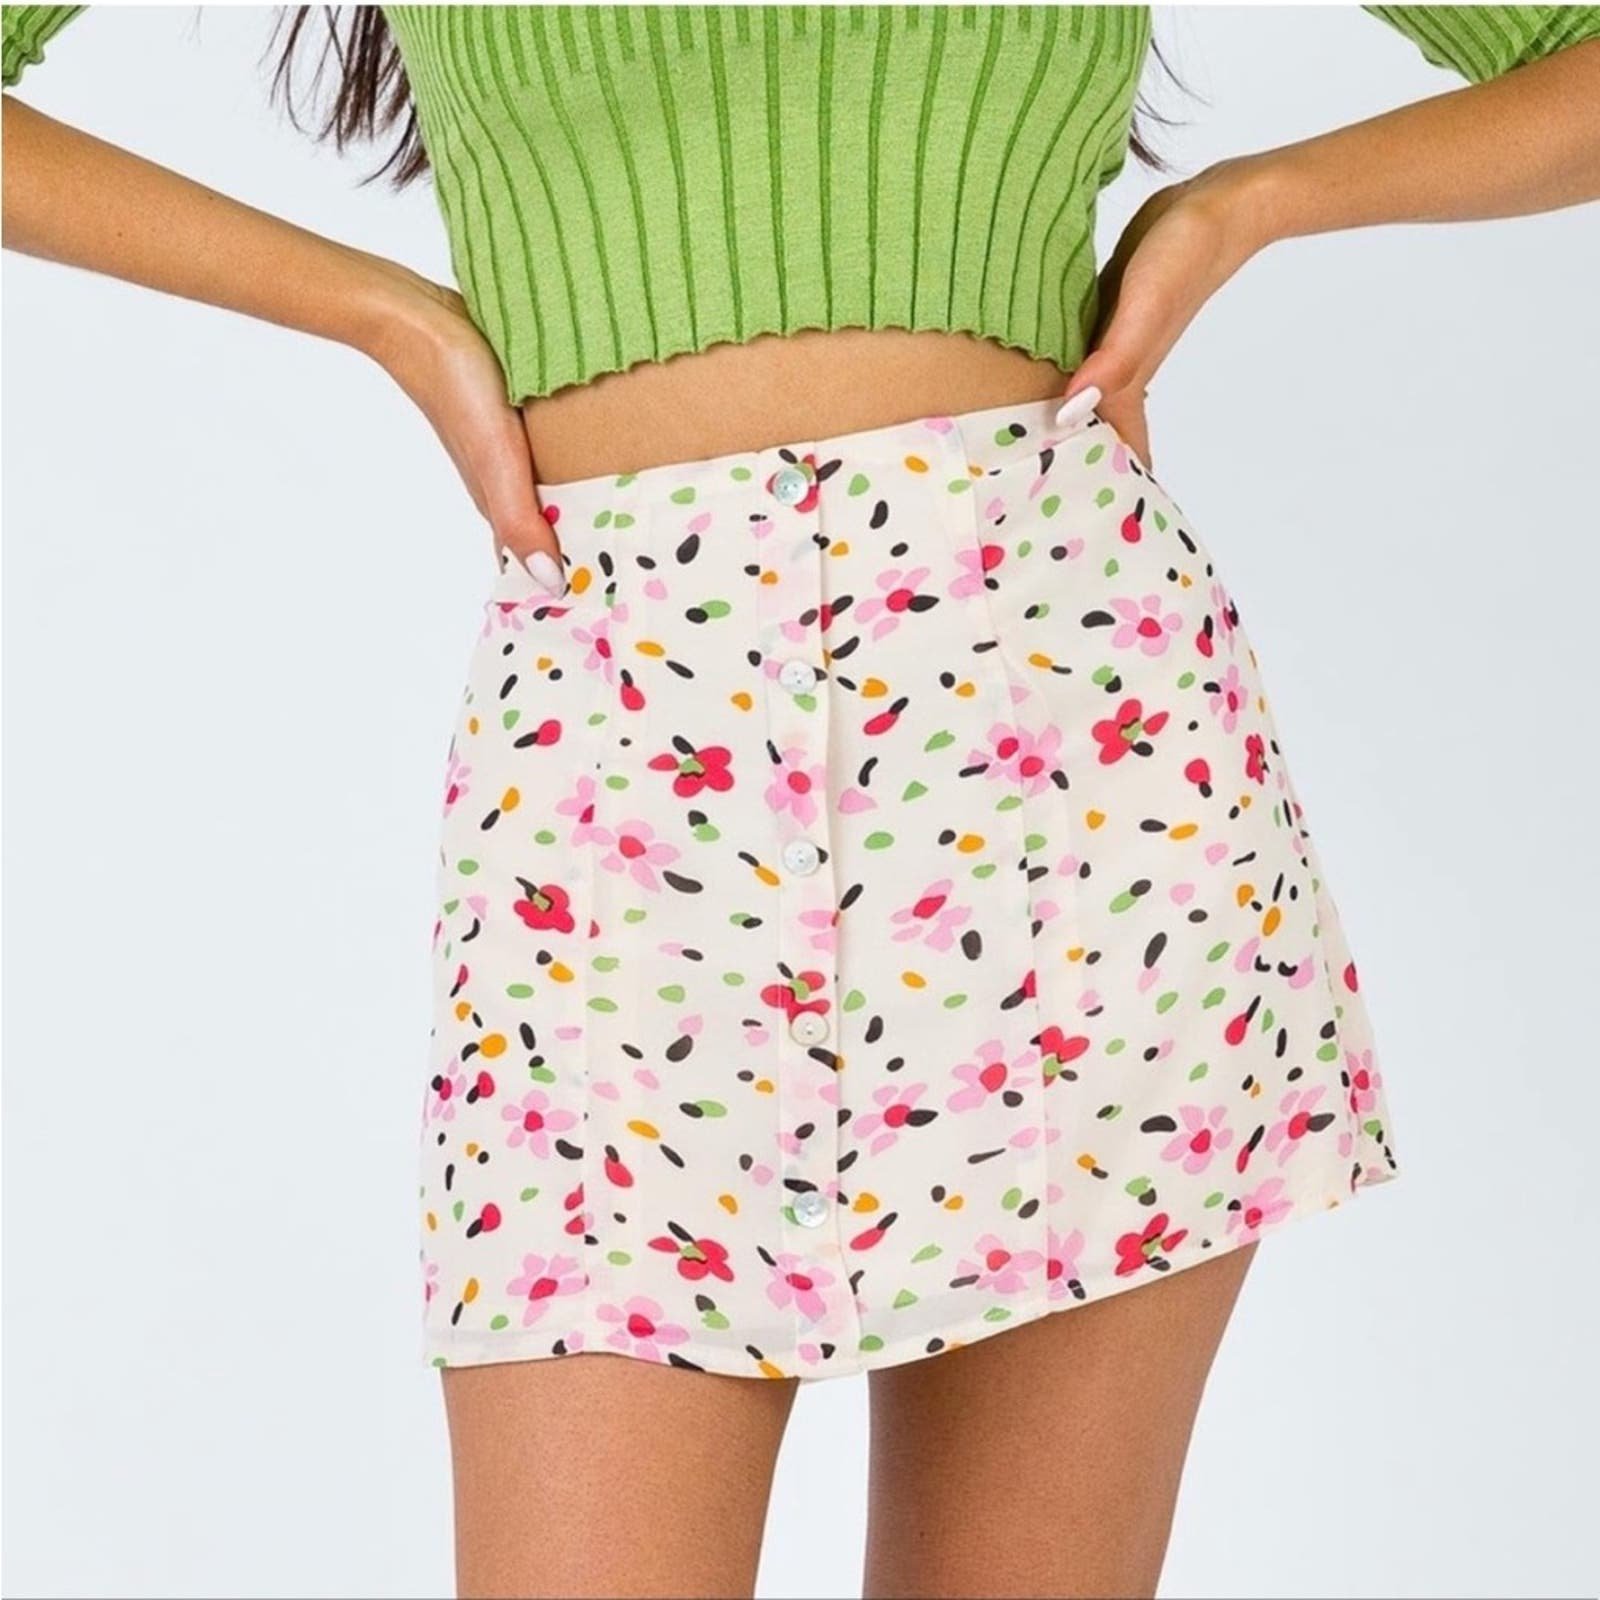 Buy NEW Princess Polly Dede Mini Skirt Size US 6 goQ8aiUqo just buy it